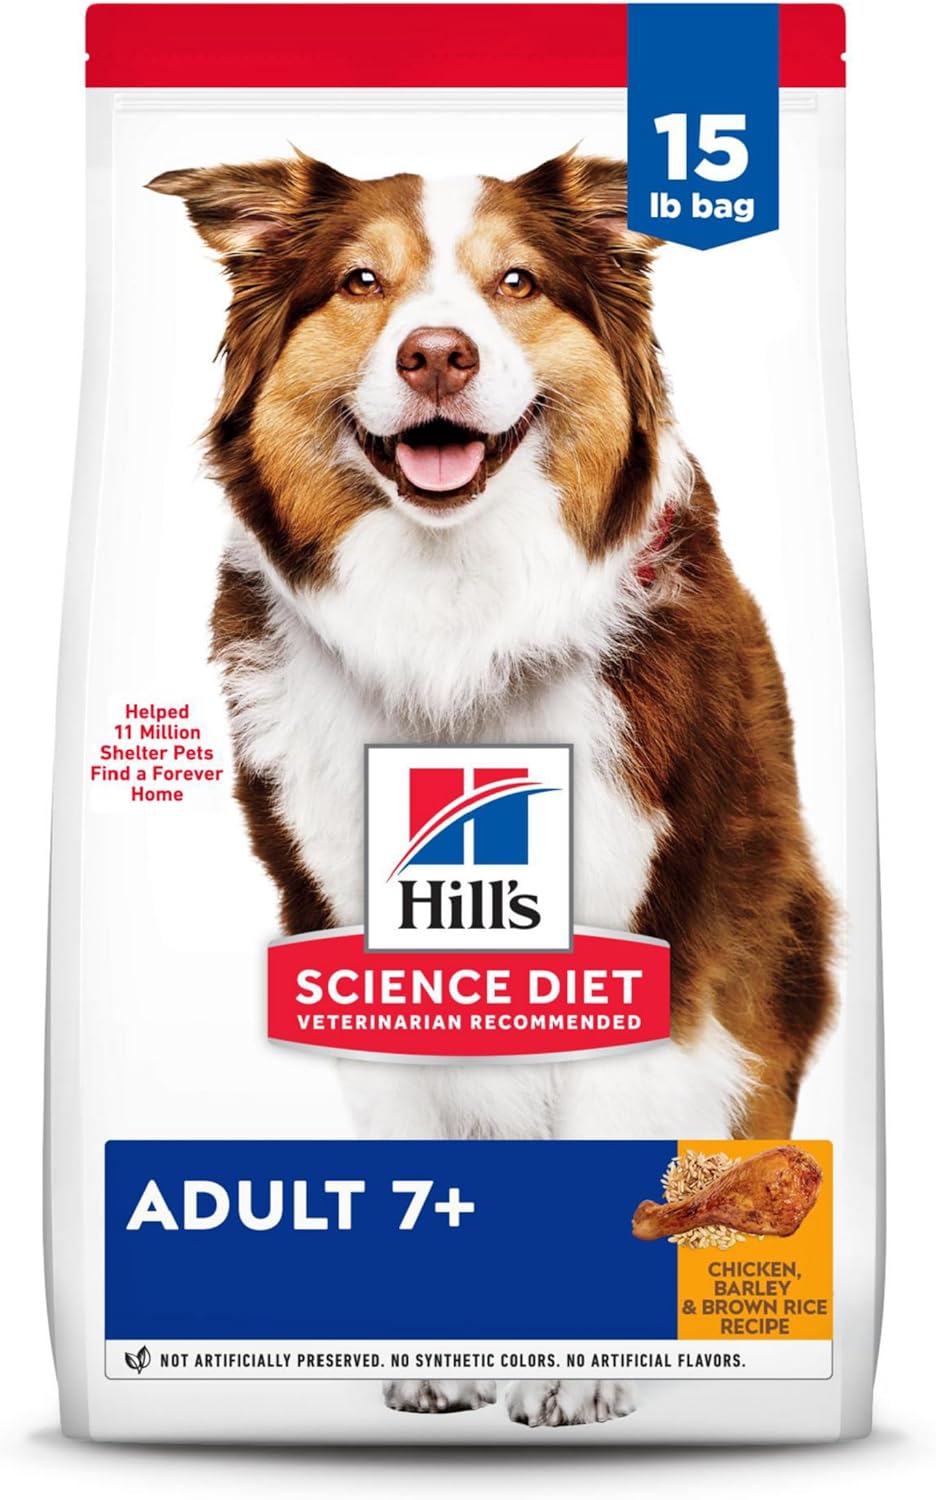 Hill's Science Diet Adult 7+, Senior Adult 7+ Premium Nutrition, Dry Dog Food, Chicken, Brown Rice, & Barley, 15 lb Bag